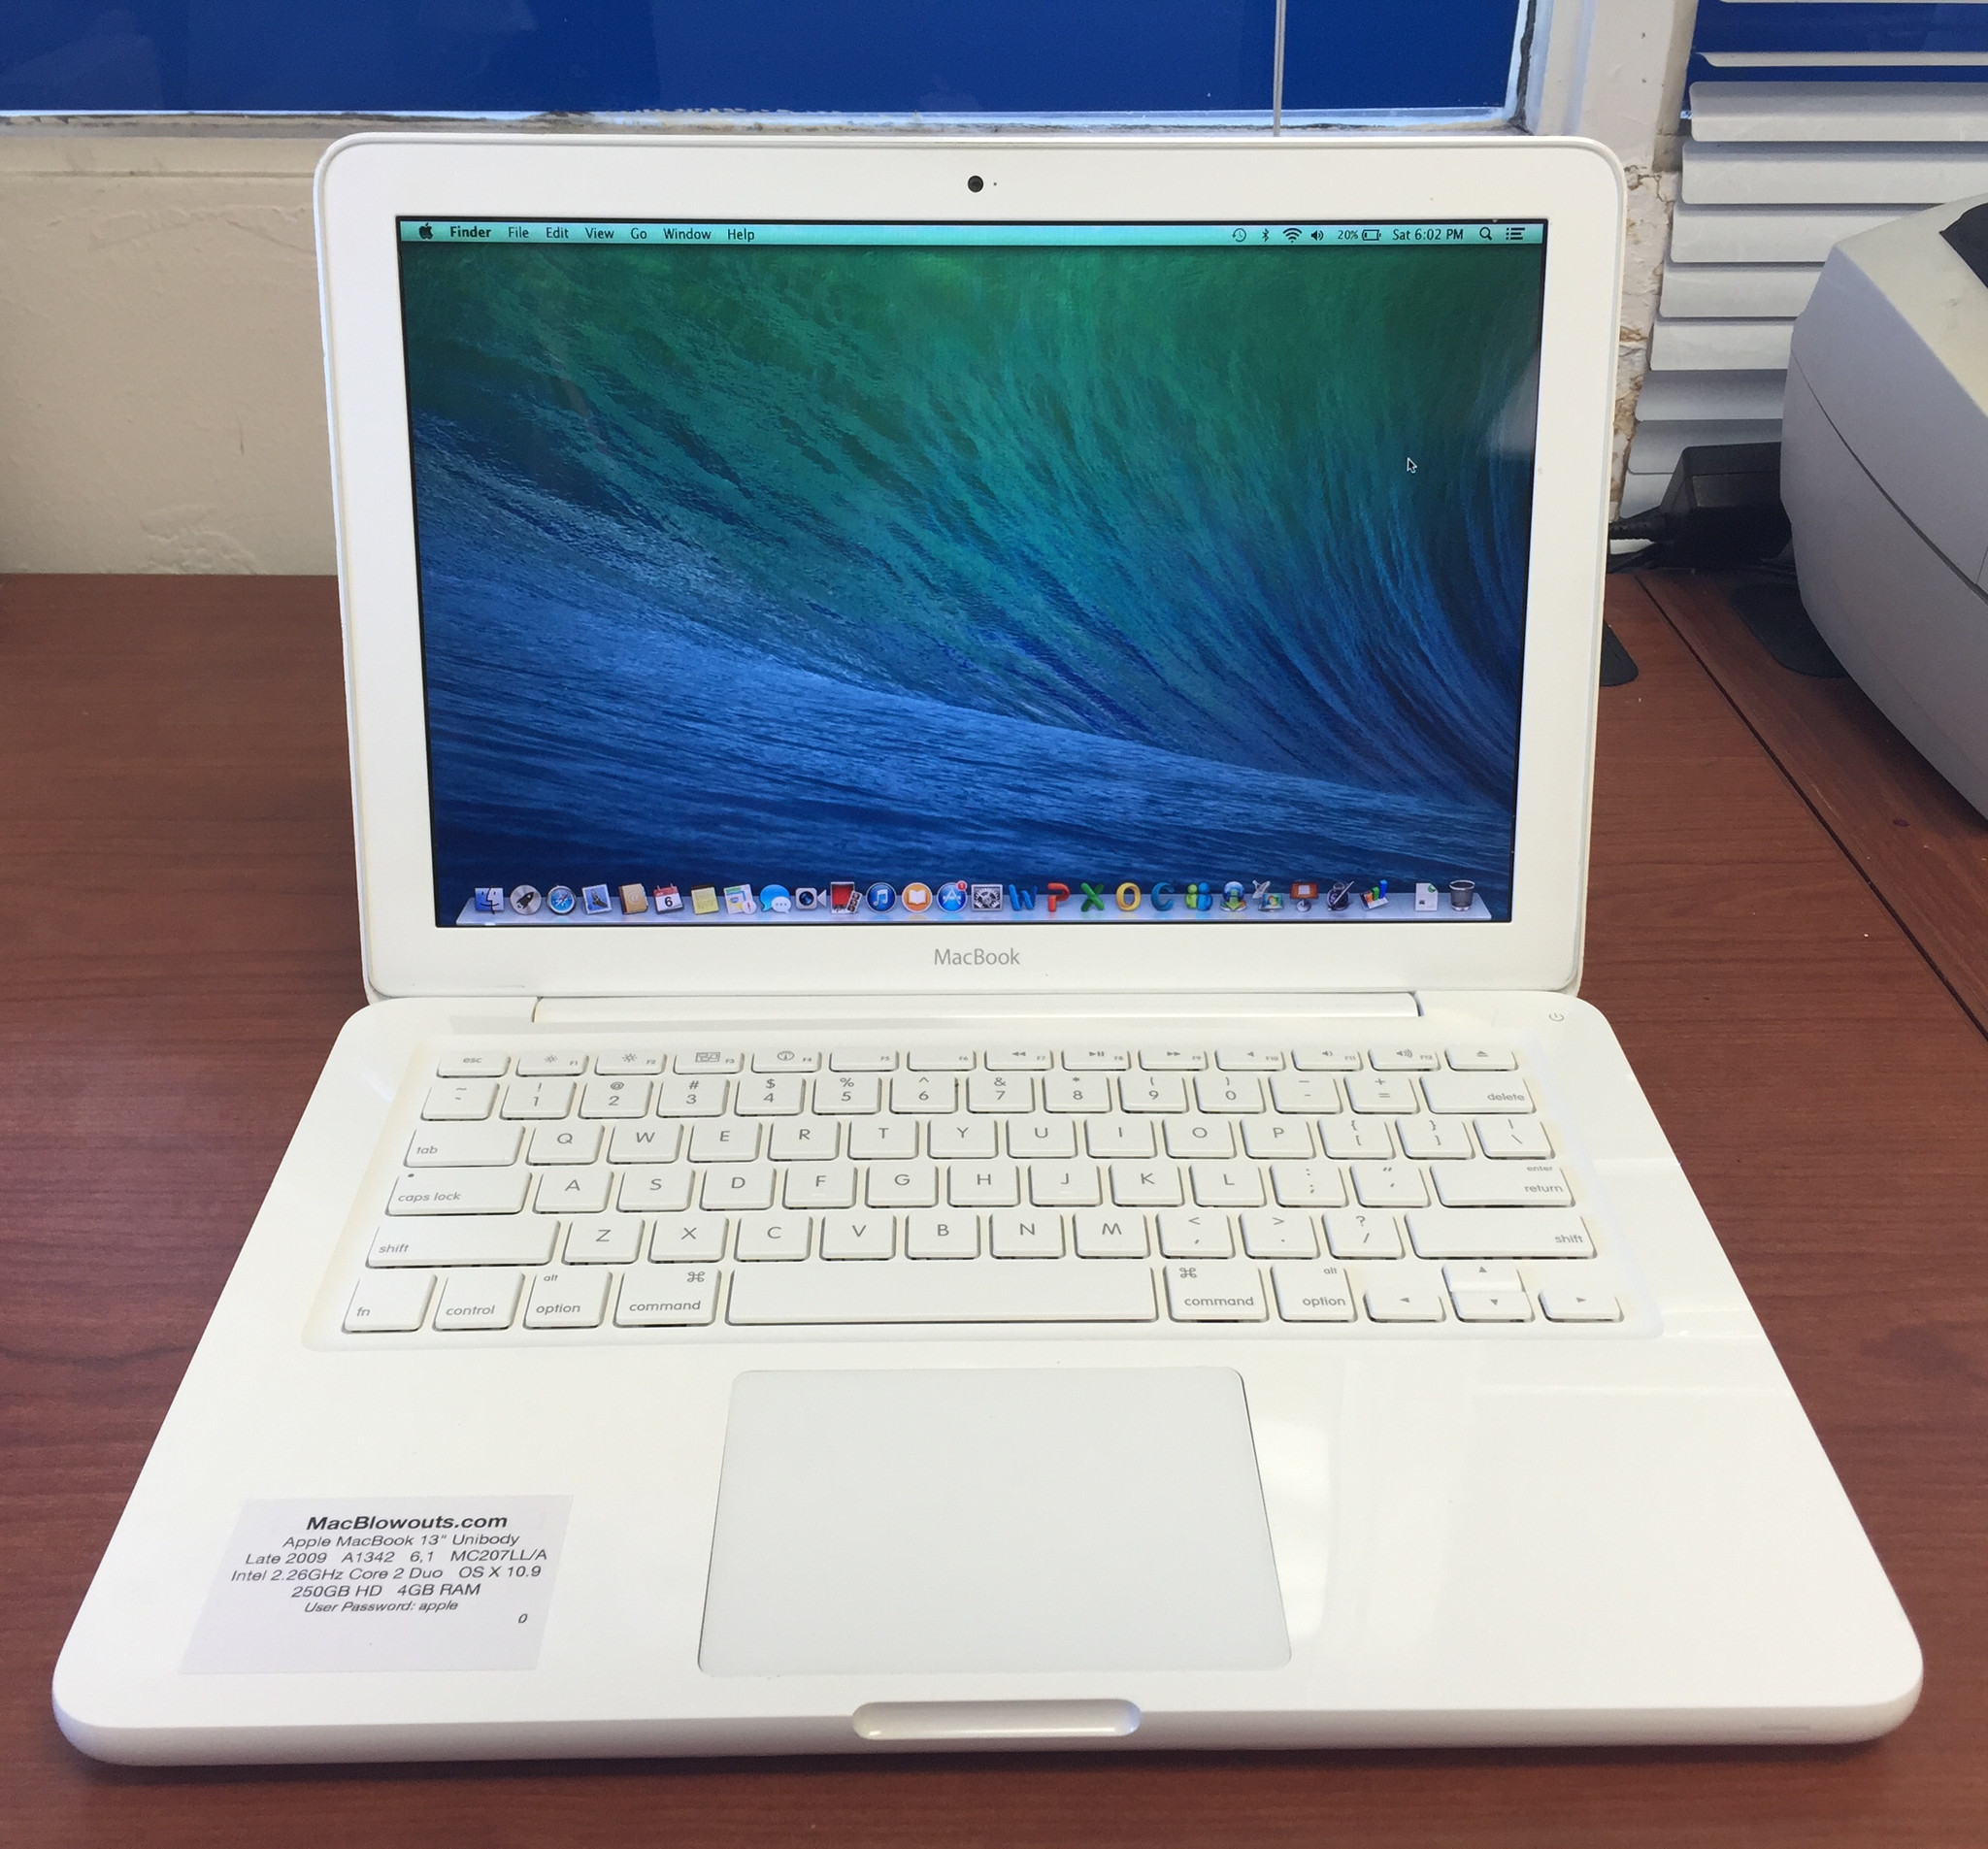 Apple MacBook 2.4 Ghz (MC516LL/A) 13.3-Inch Laptop White Unibody ...